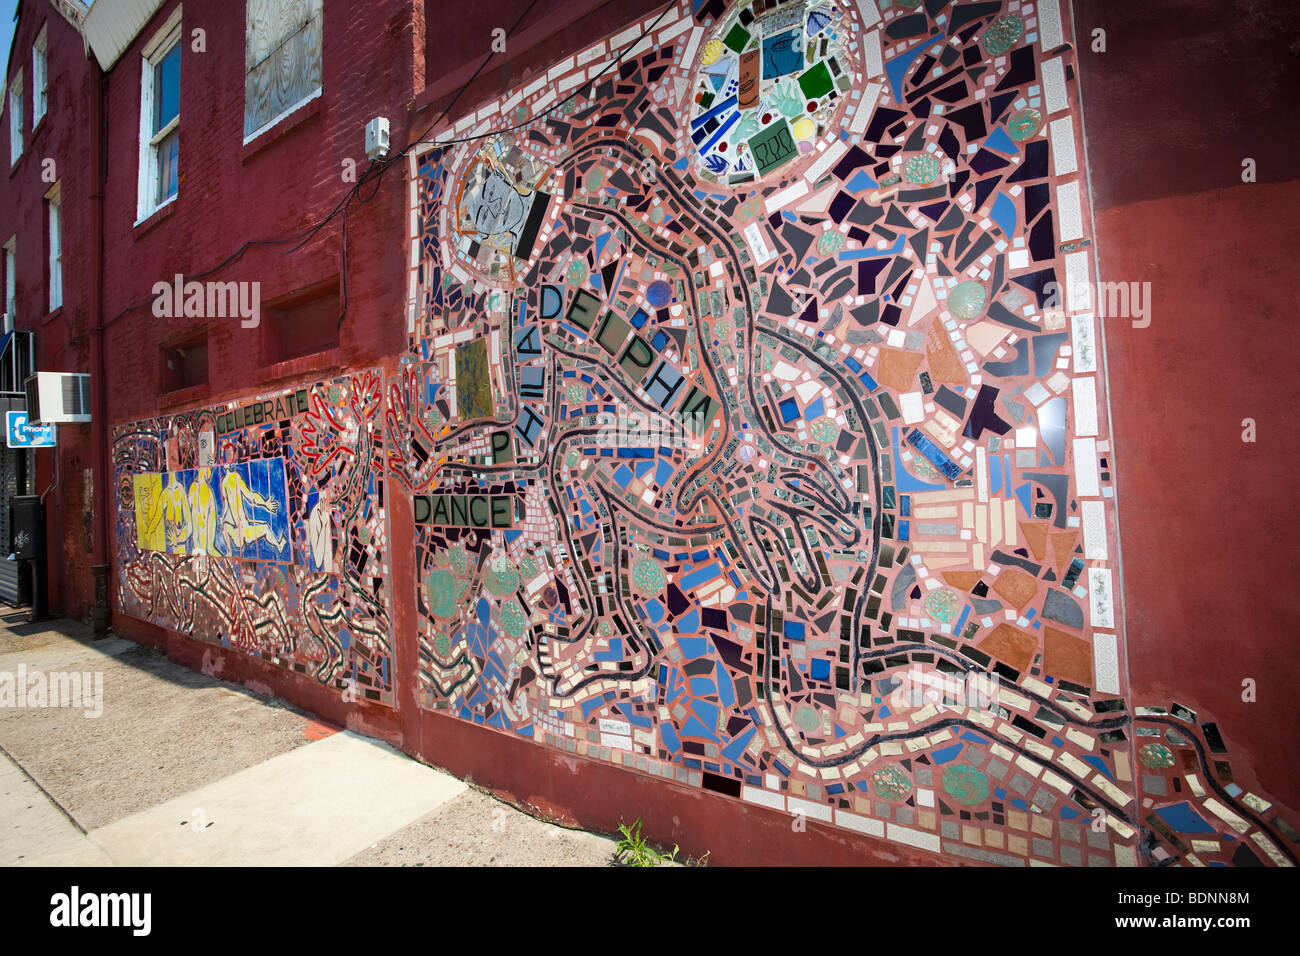 Fliesen, Glas und Spiegel Mosaik Wandbild, Philadelphia, PA, USA Stockfoto